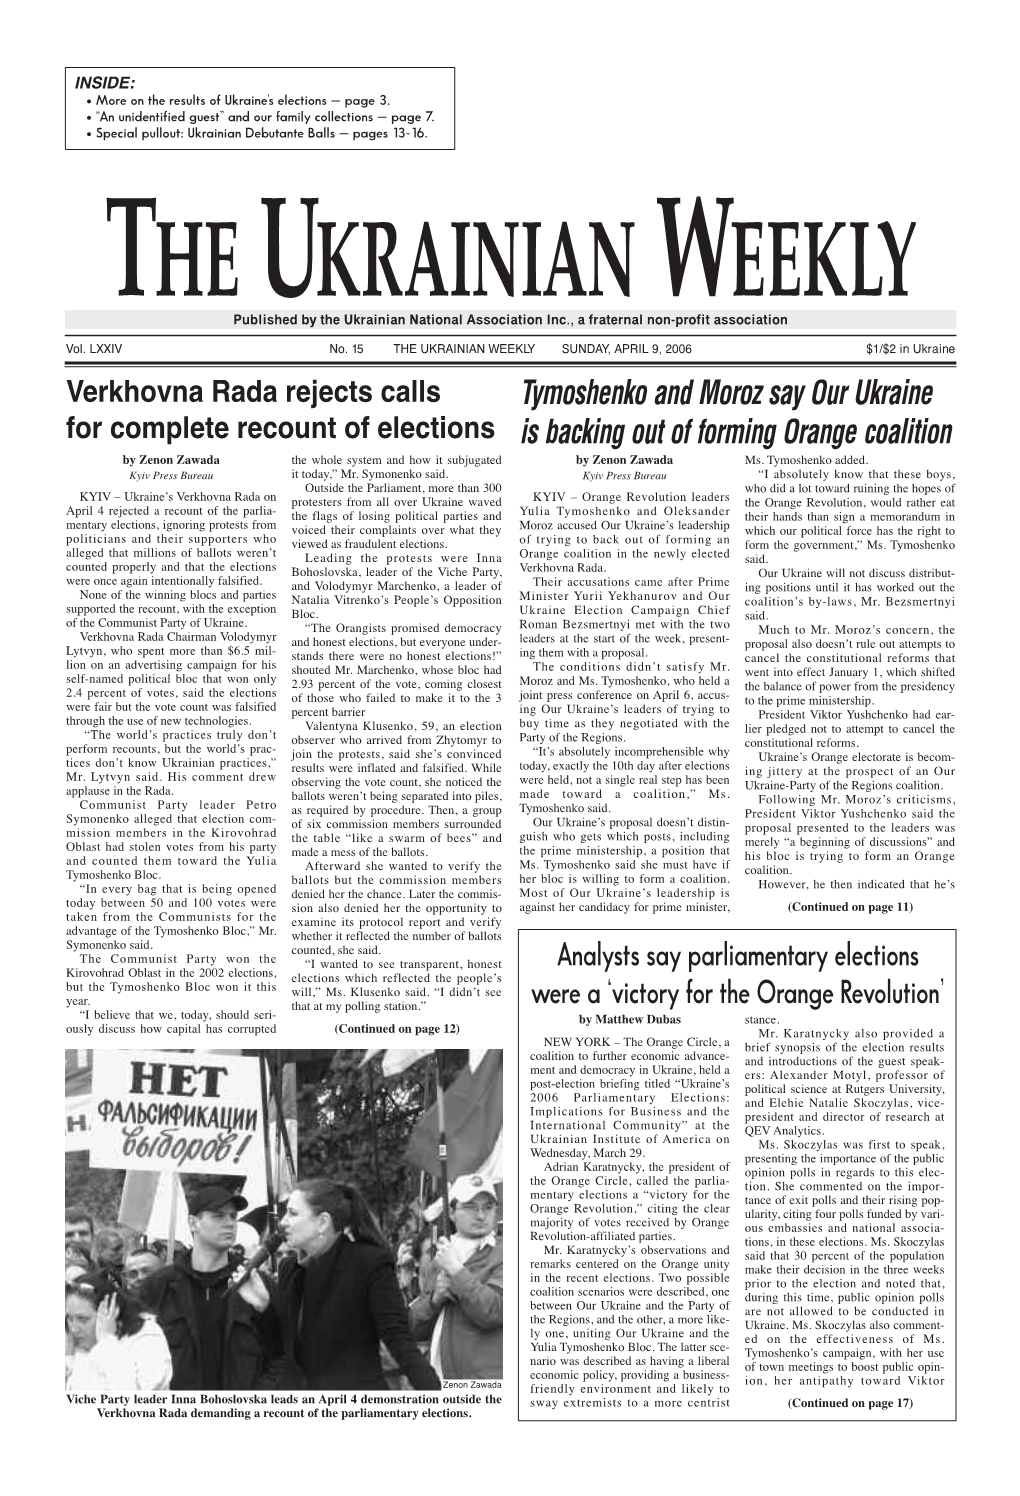 The Ukrainian Weekly 2006, No.15